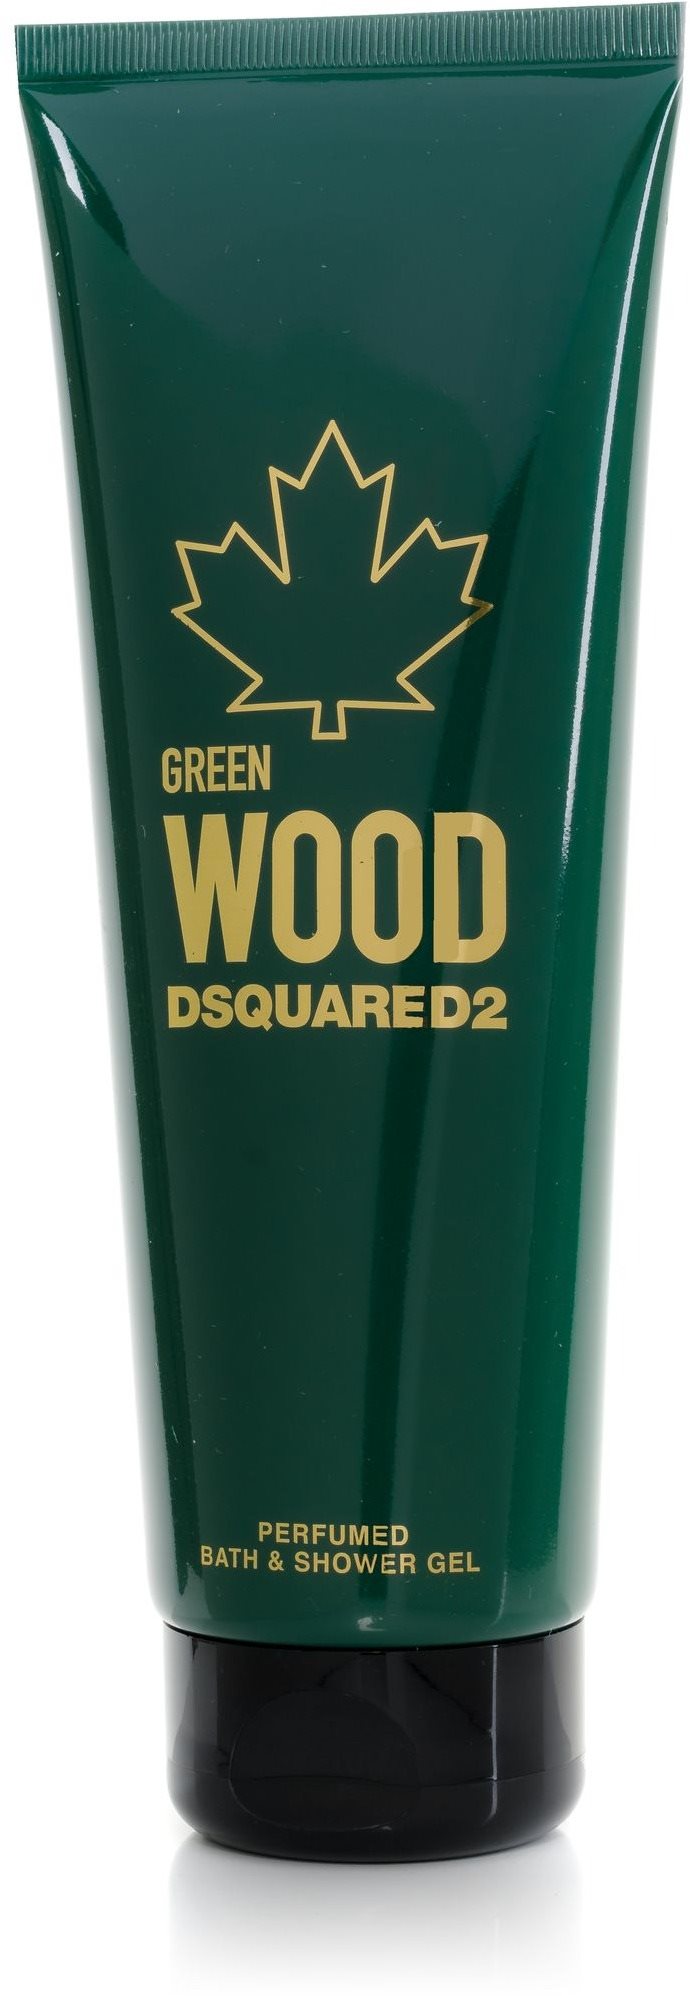 DSQUARED2 Green Wood Bath & Shower Gel 200 ml